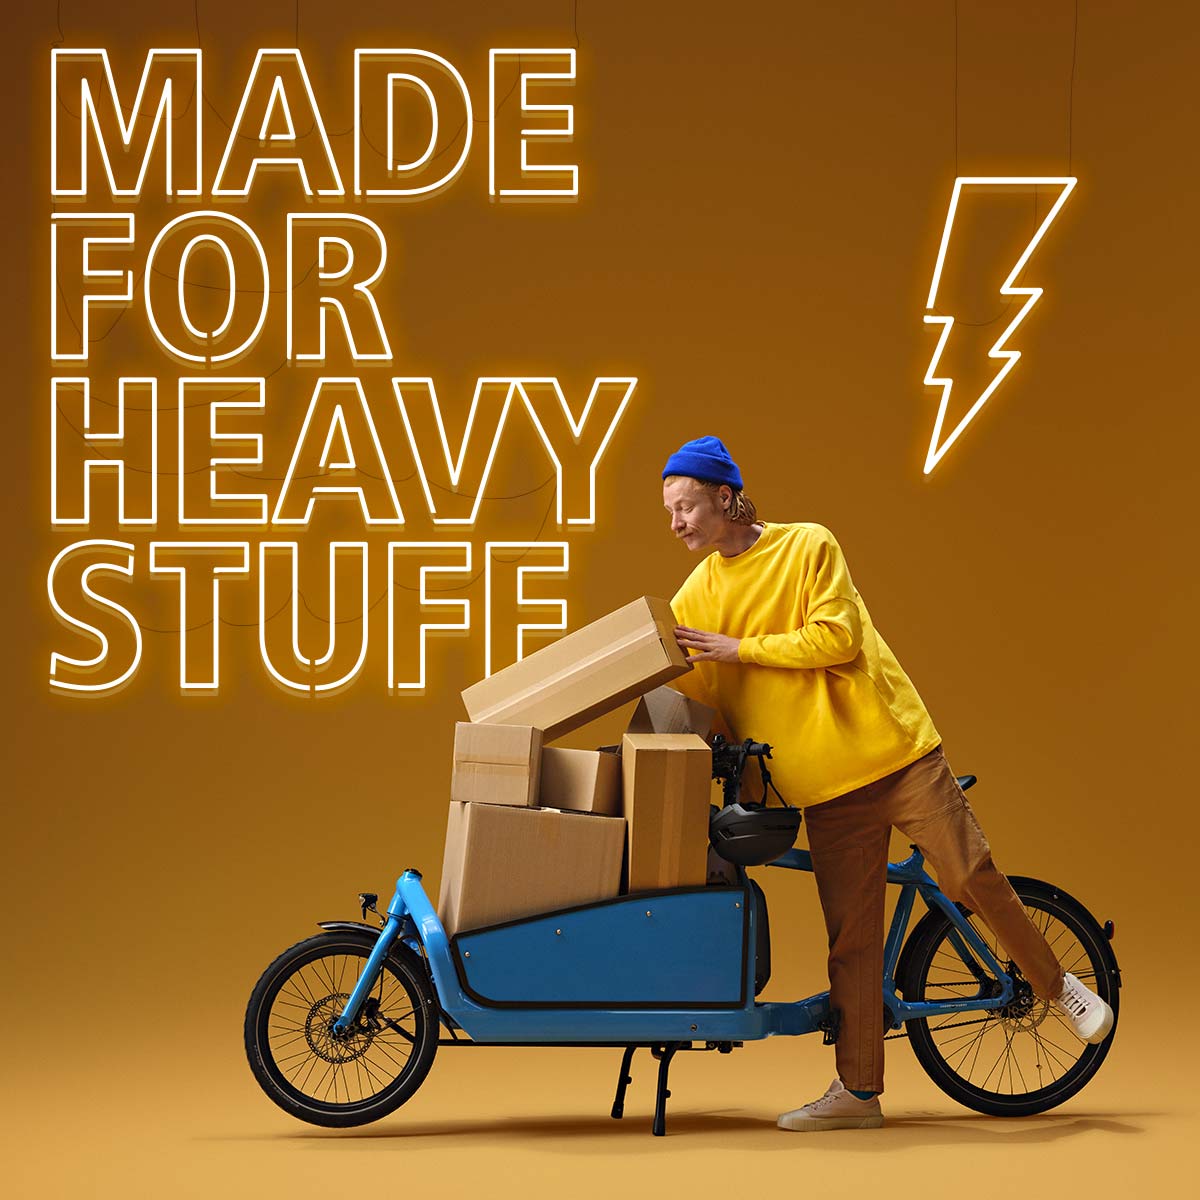 Shimano Cargo e-bikes, heavy-duty electric motor cargo-specific power tunes, made for heavy stuff